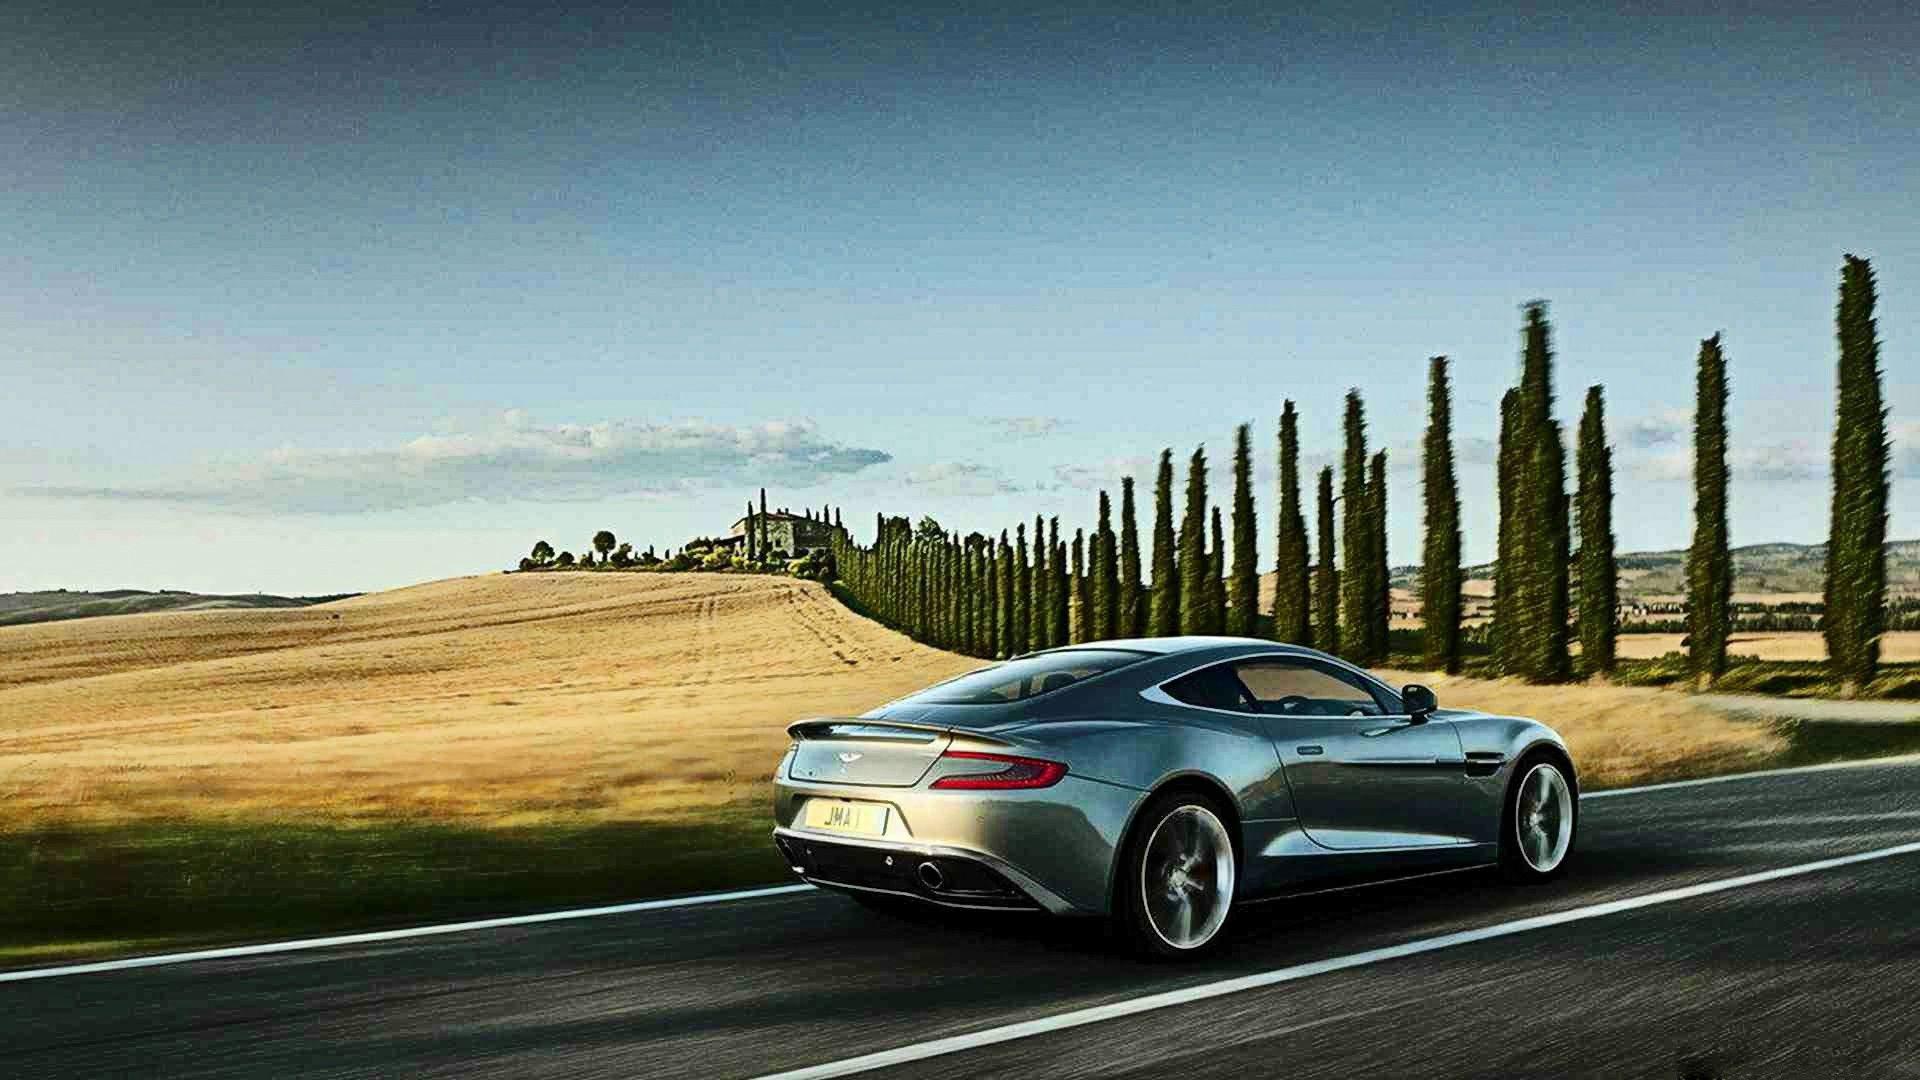 Free HD Aston Martin Vanquish Wallpaper Download